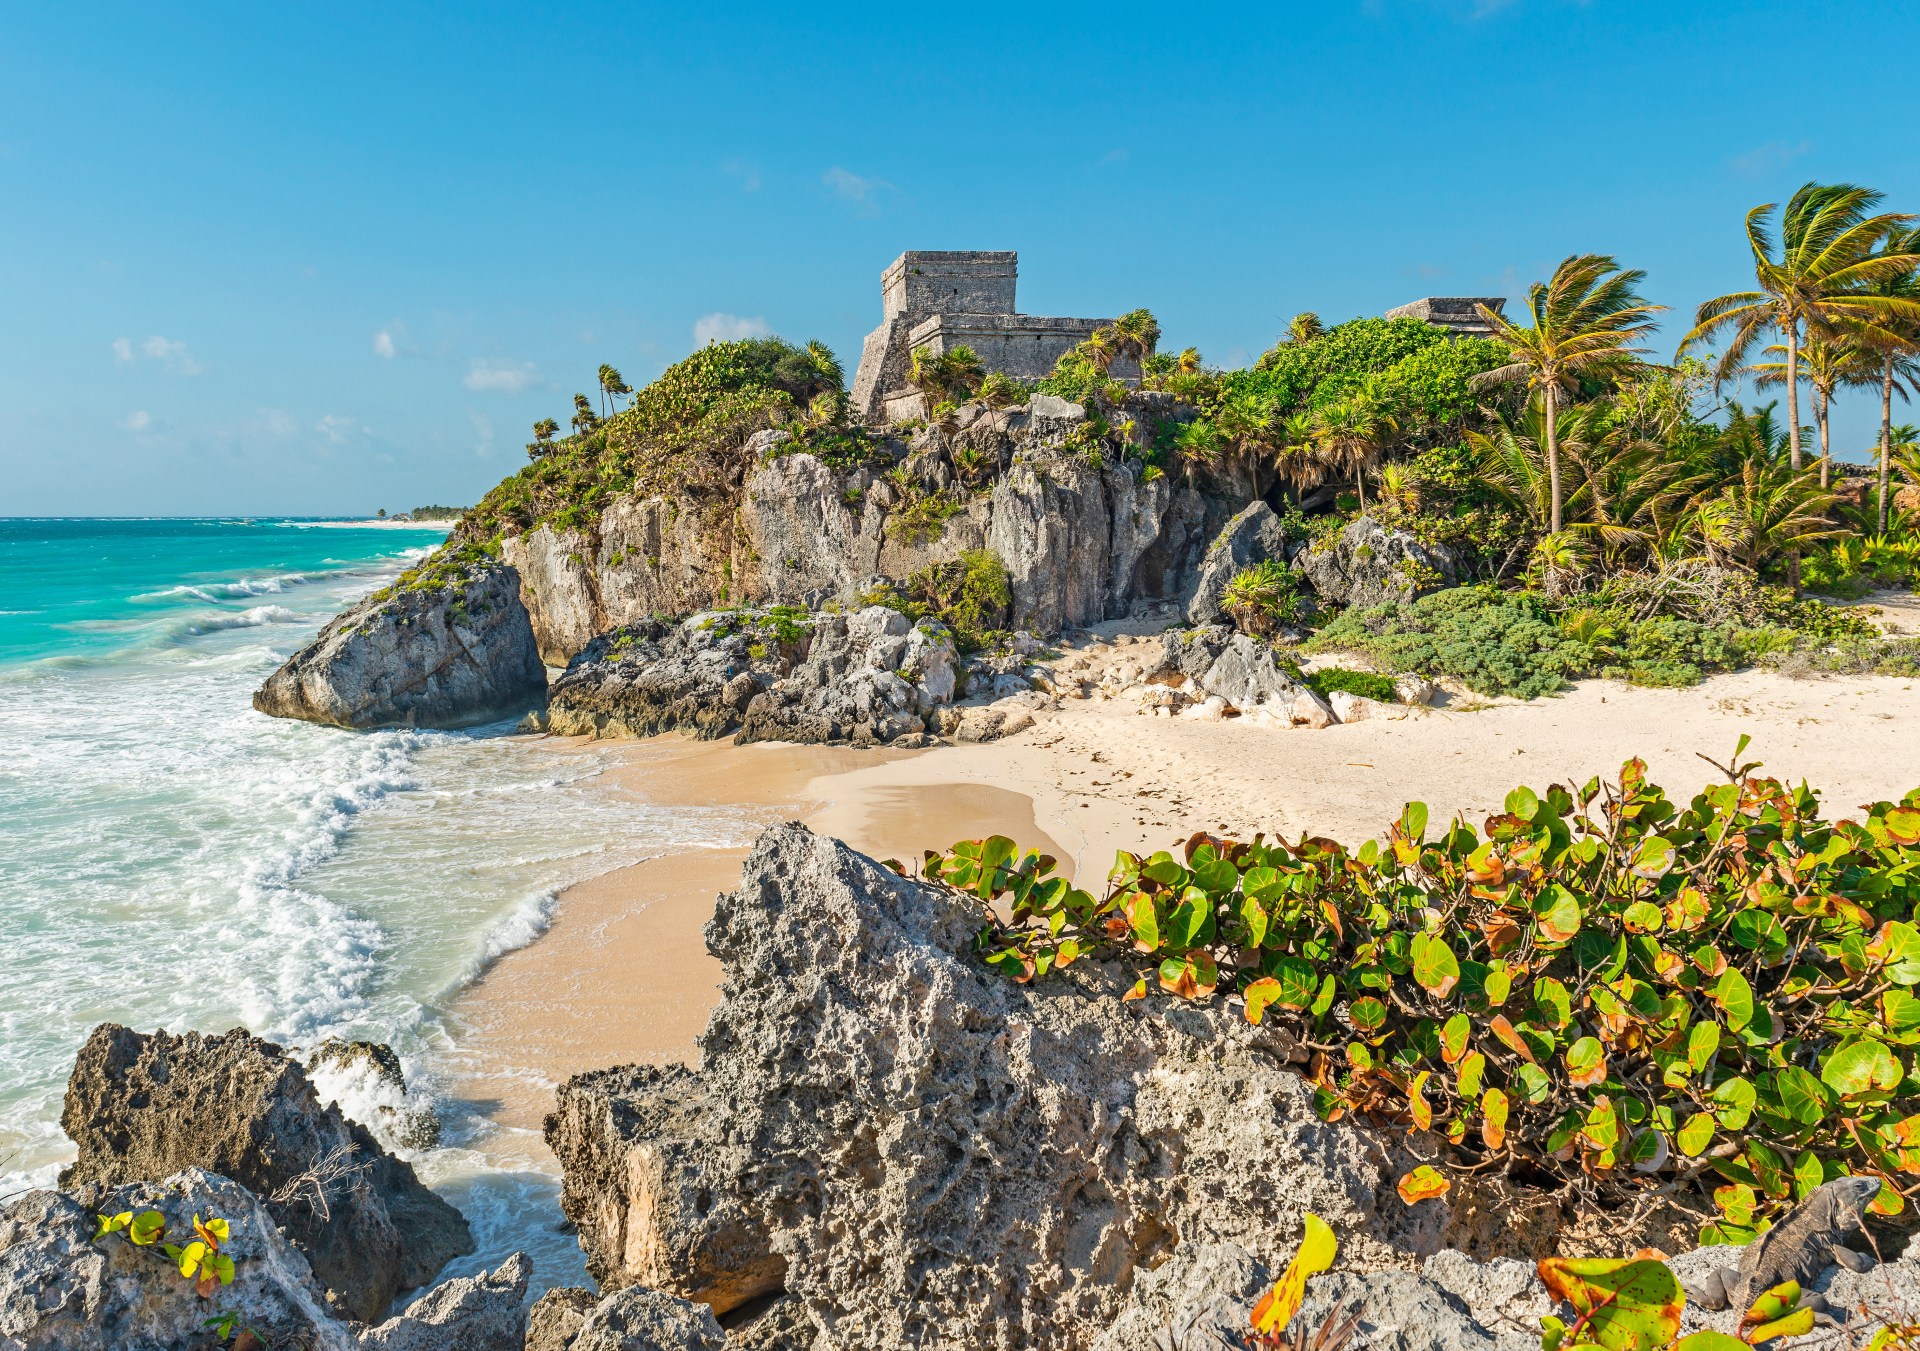 The maya ruins of Tulum with its idyllic beach by the Caribbean Sea, Quintana Roo state, Yucatan Peninsula, Mexico.